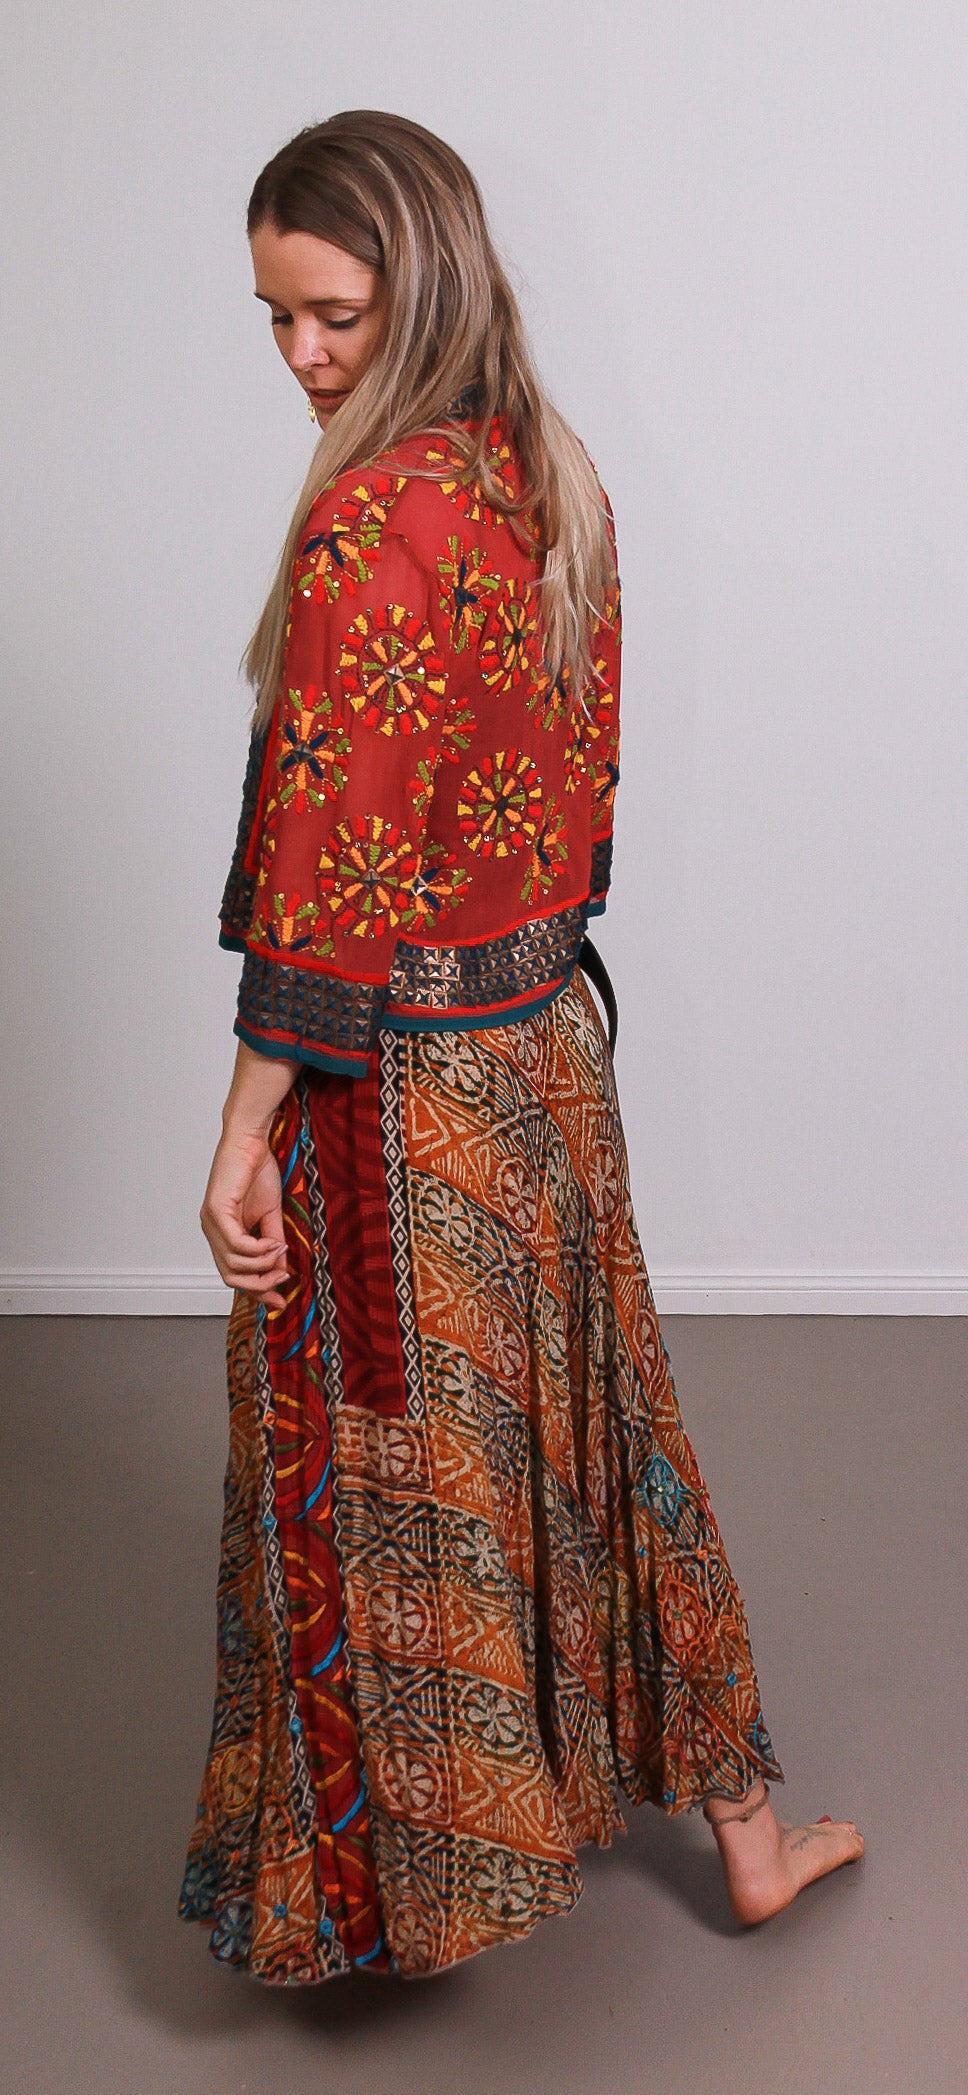 Woman wearing bohemian sari outfit